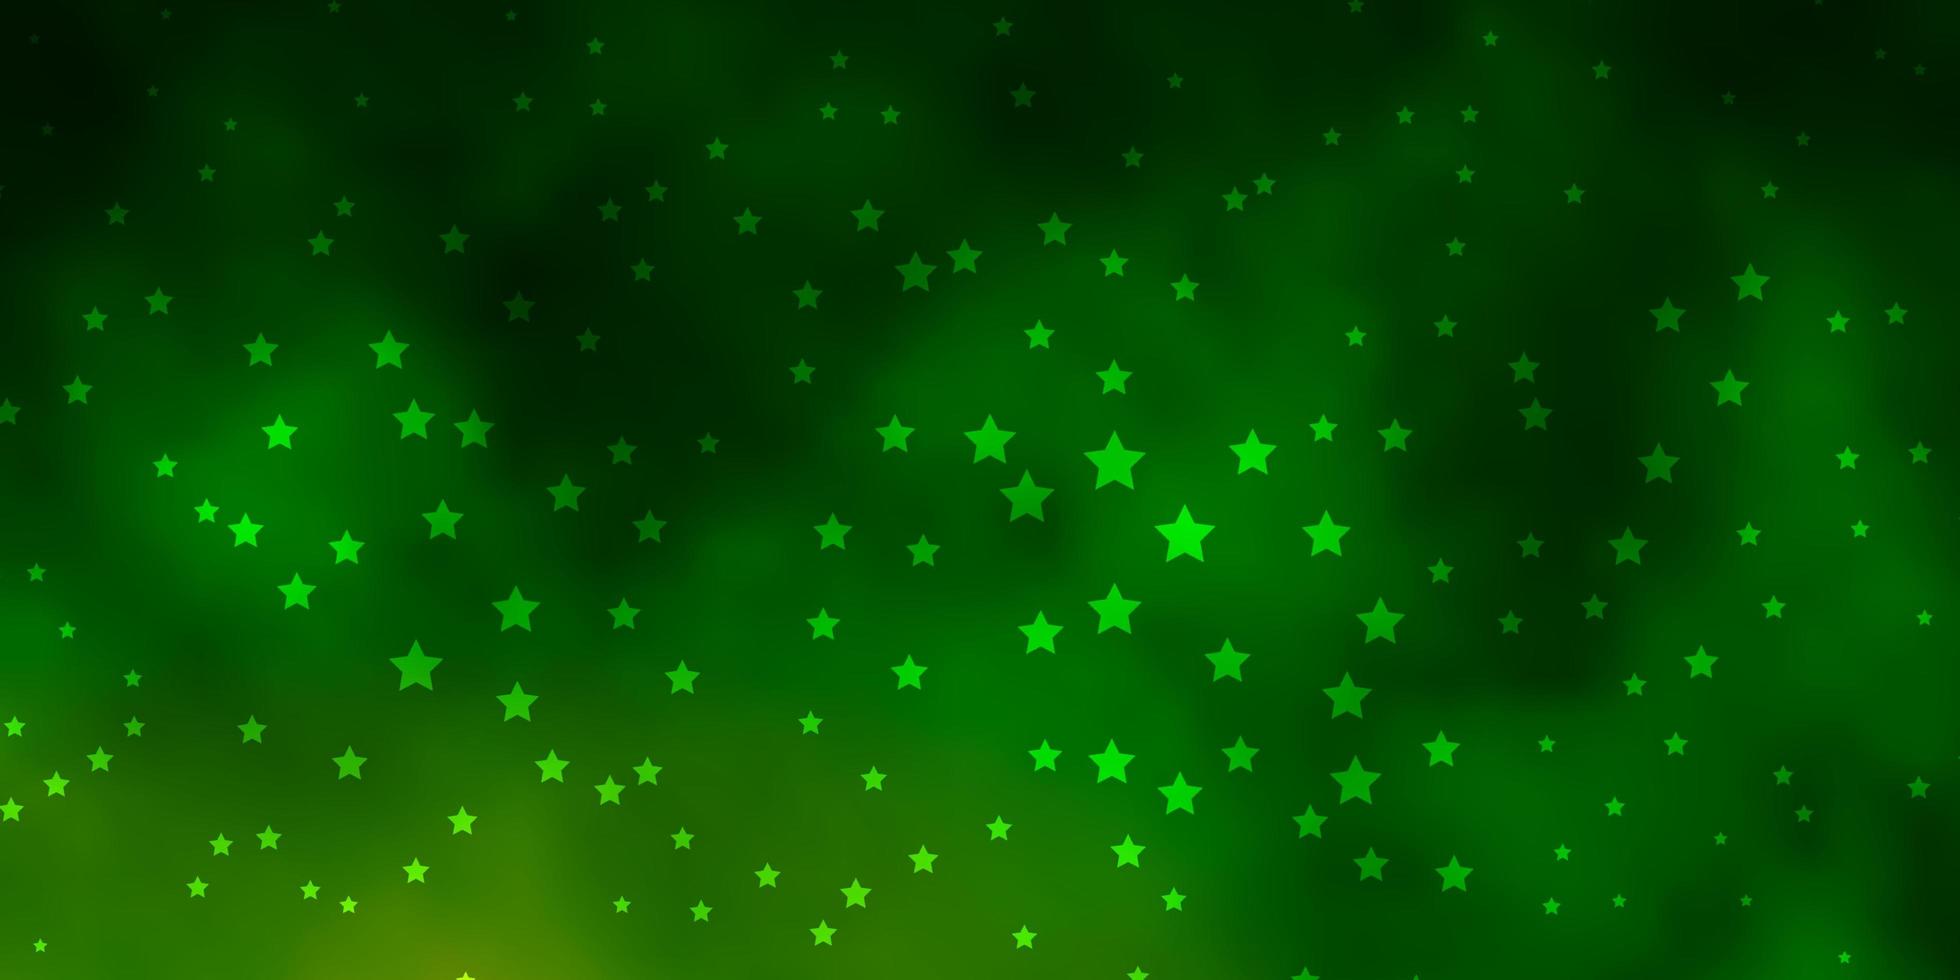 Dark Green vector texture with beautiful stars